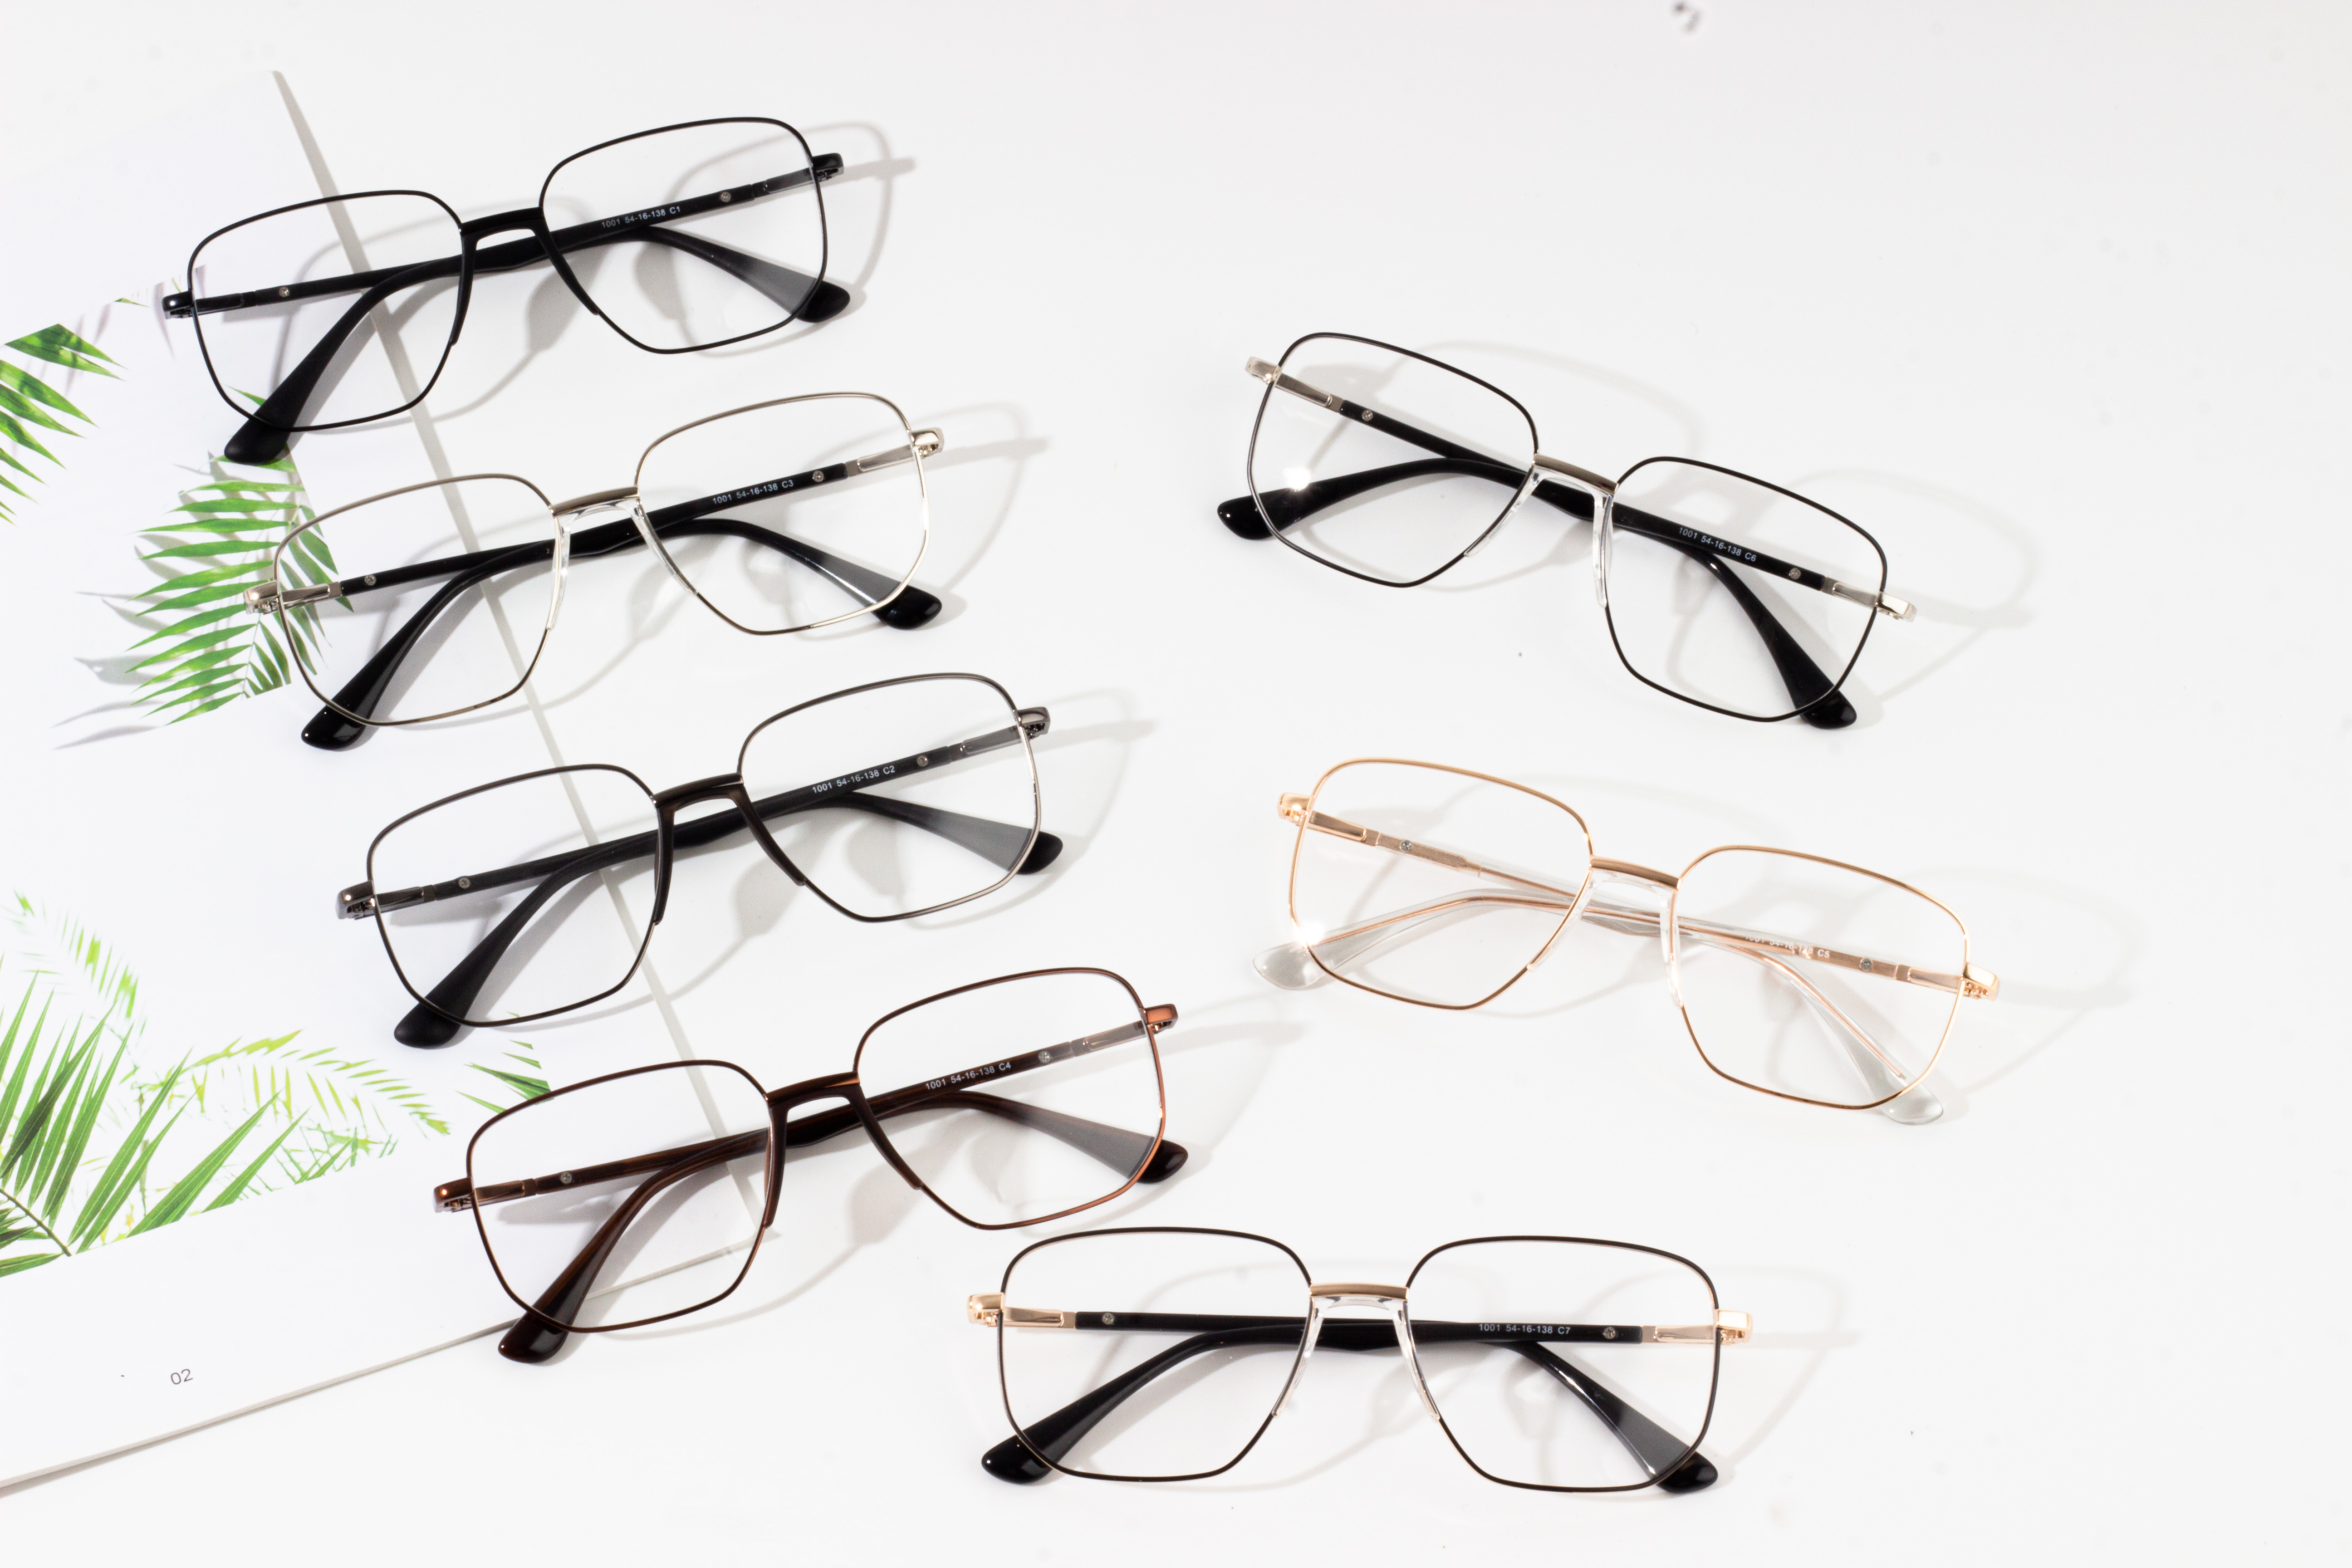 How are metal eyeglass frames made?